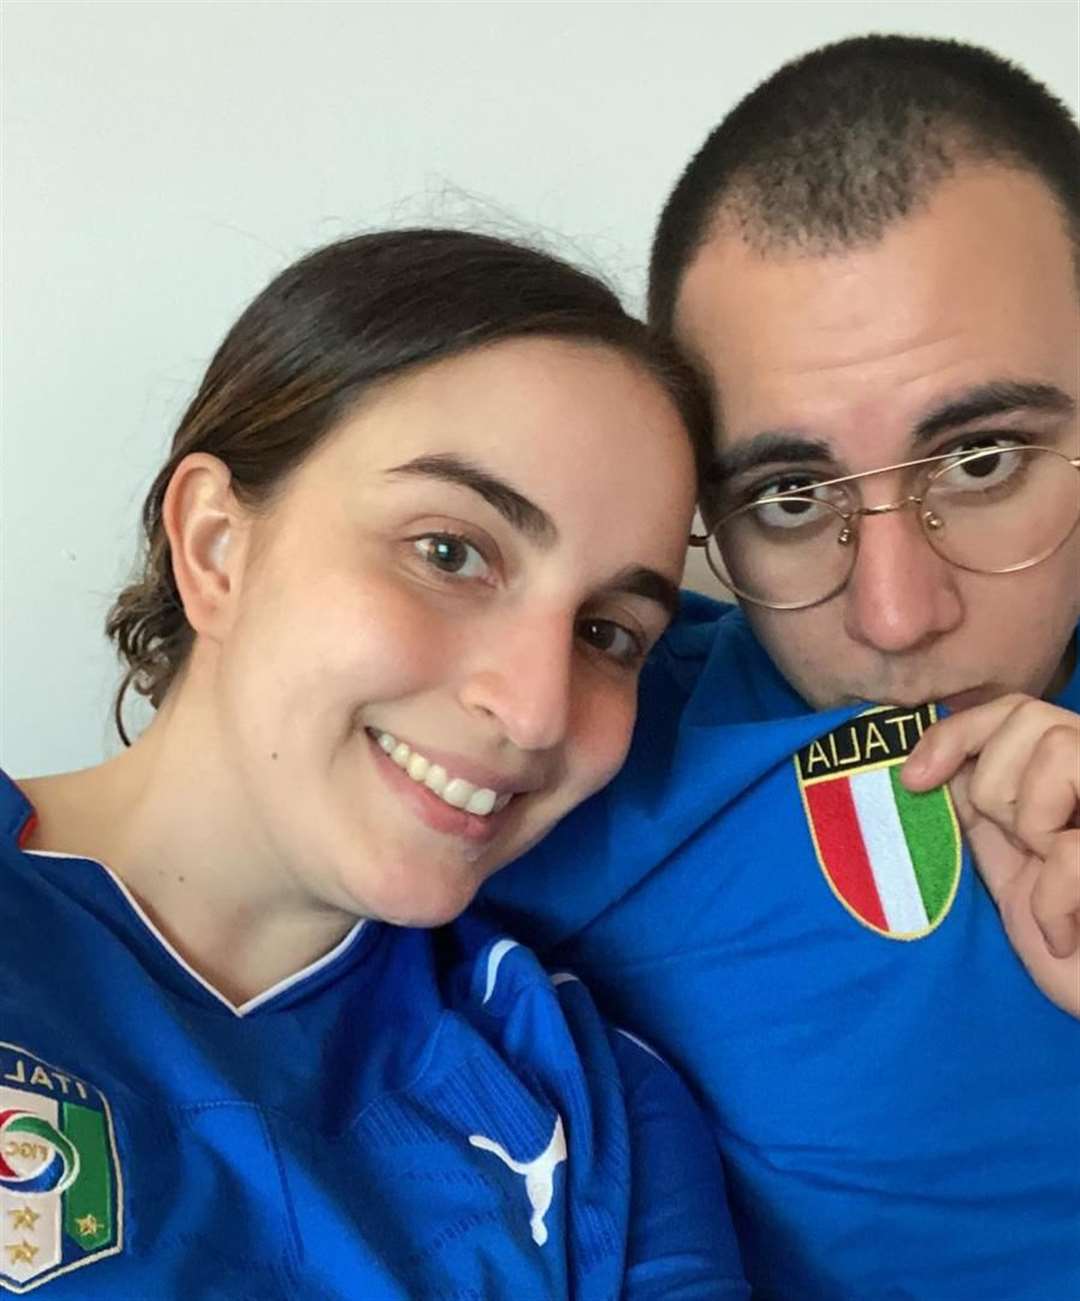 Tommaso Dimiddio and his Brazilian girlfriend Juliana